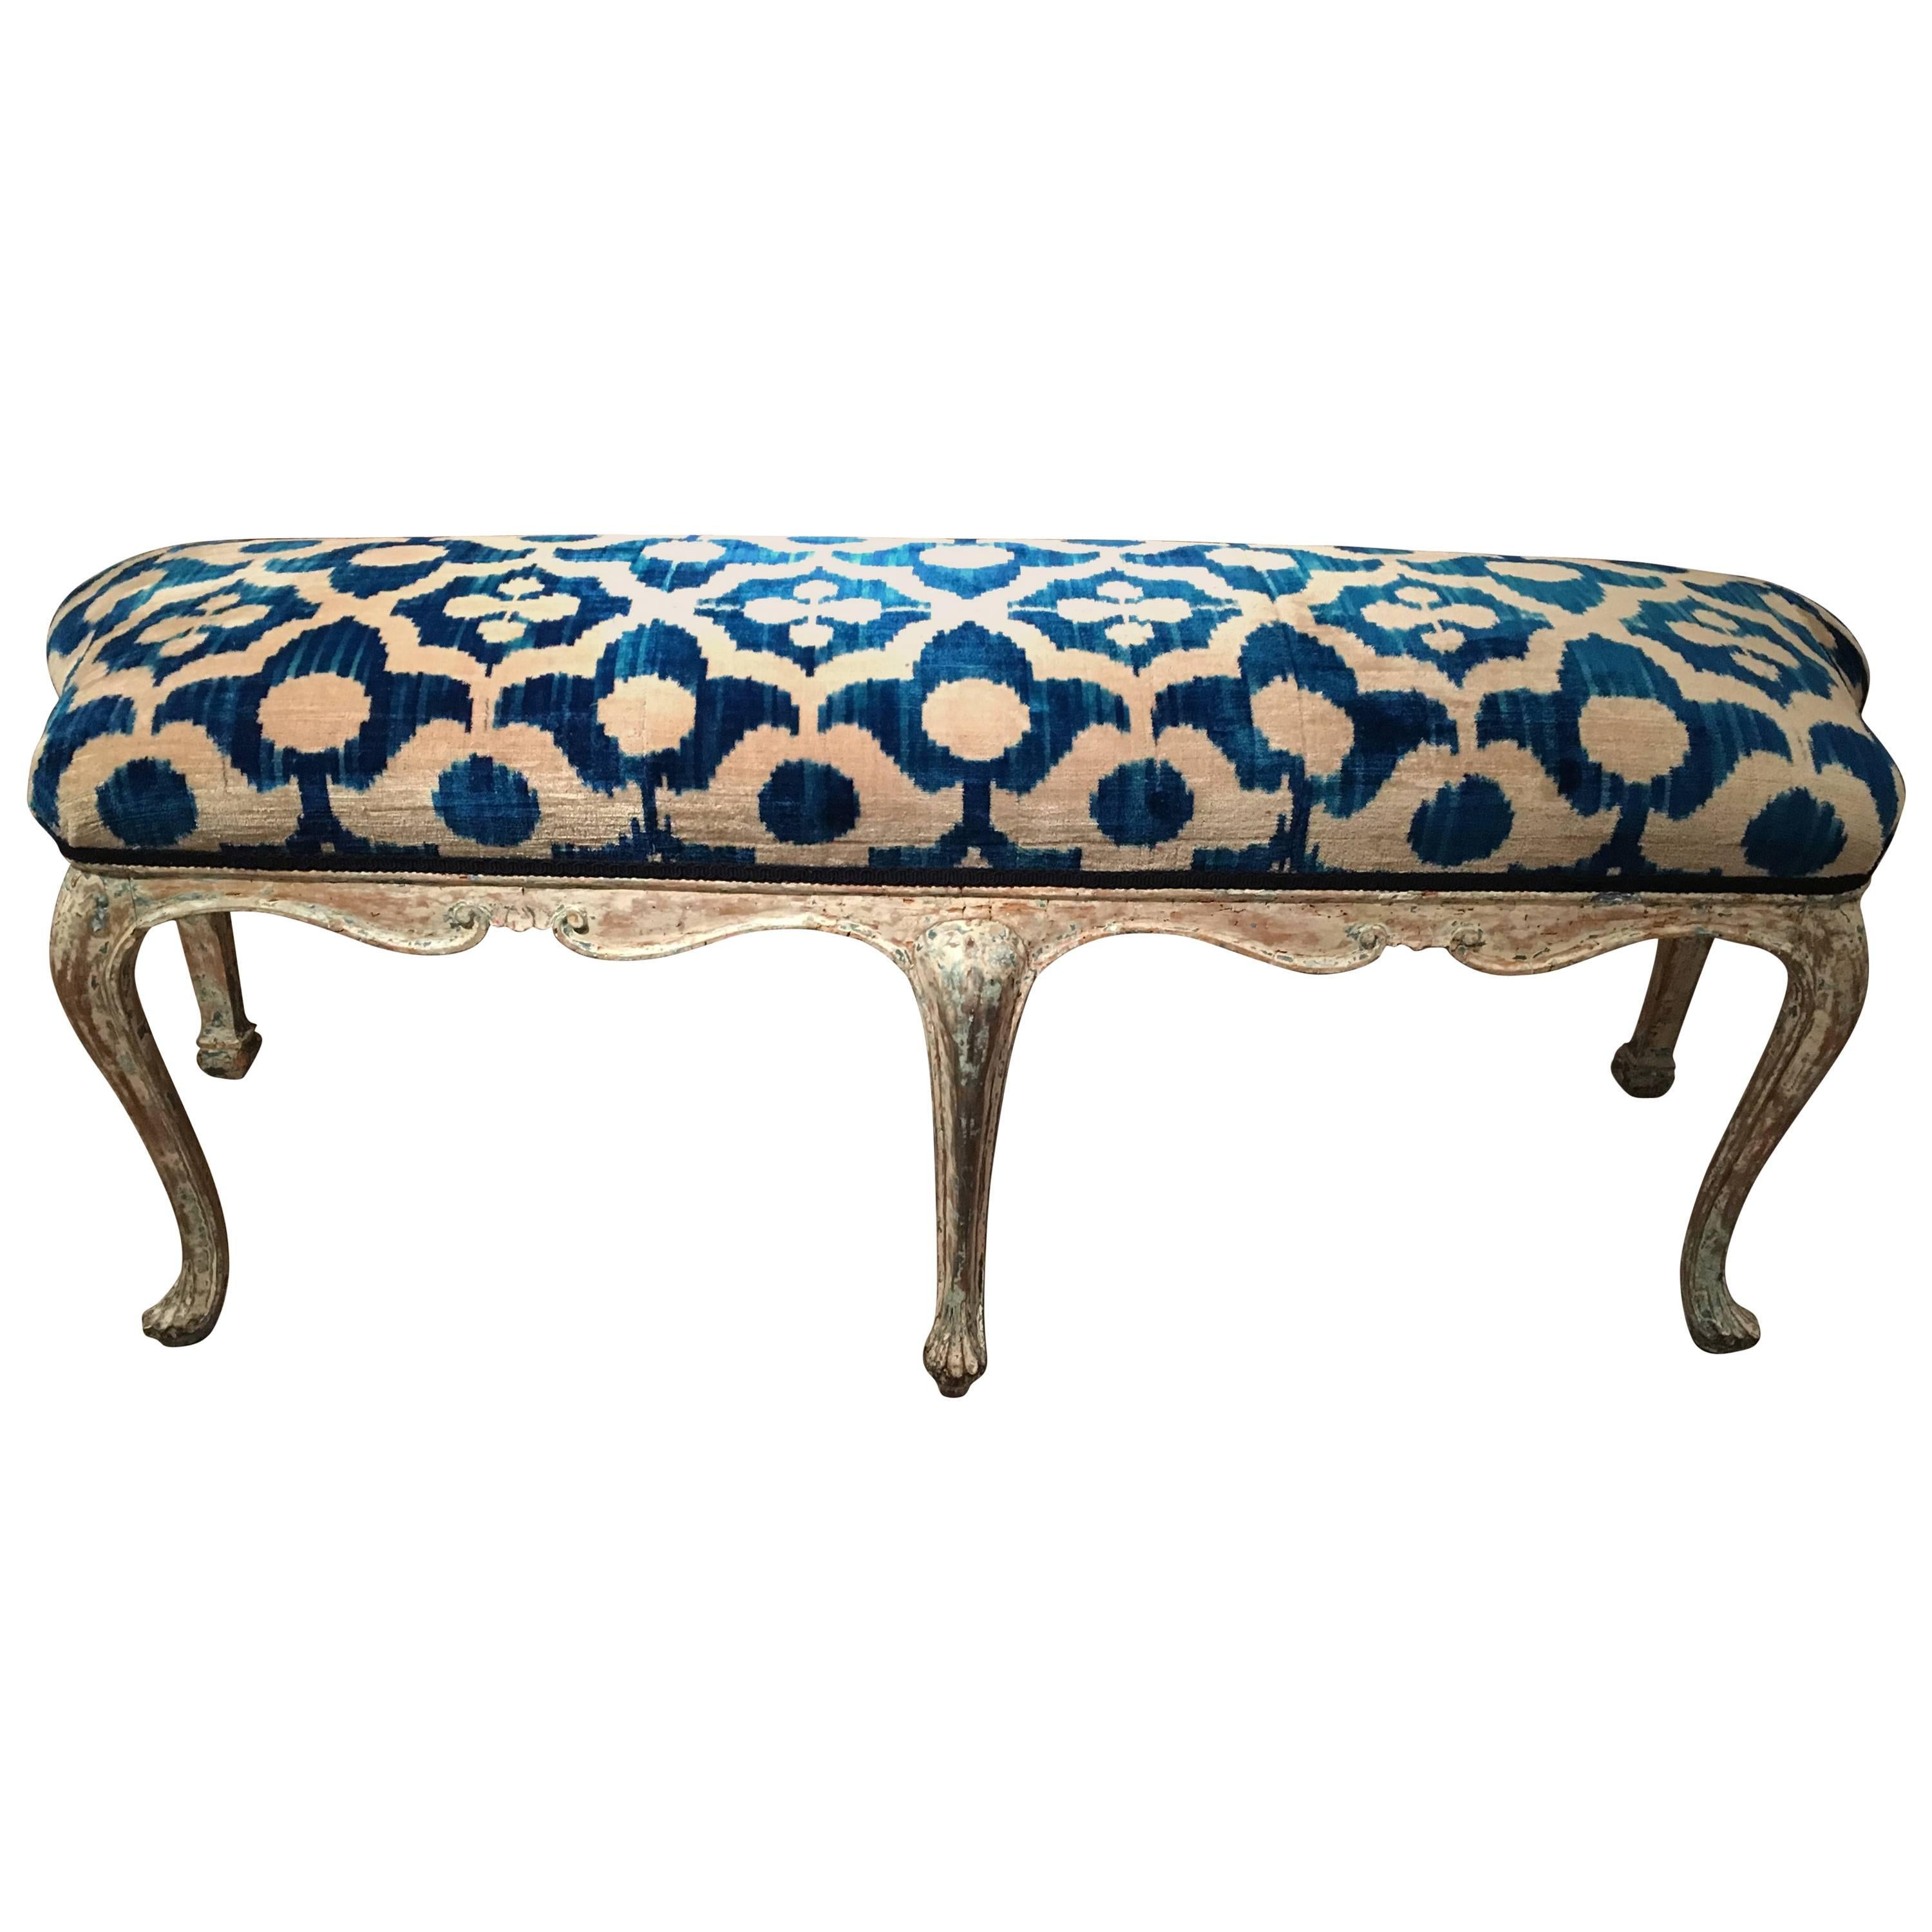 18th Century Italian Upholstered Bench